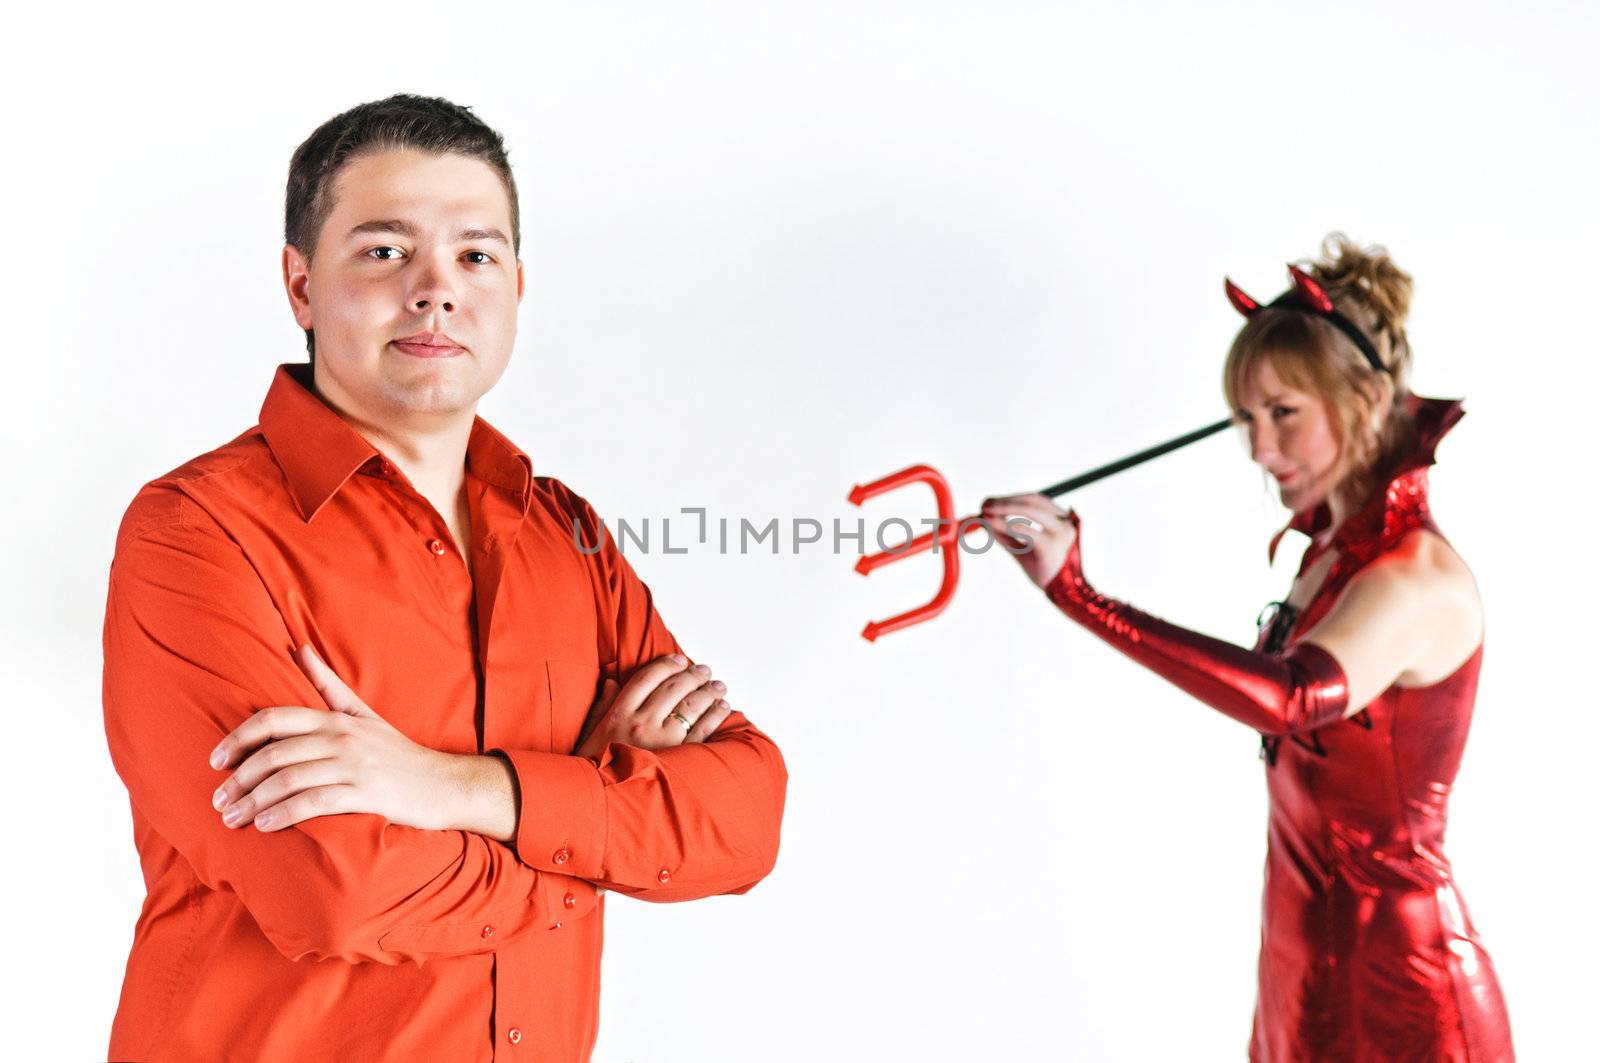 Red devil couple by shivanetua